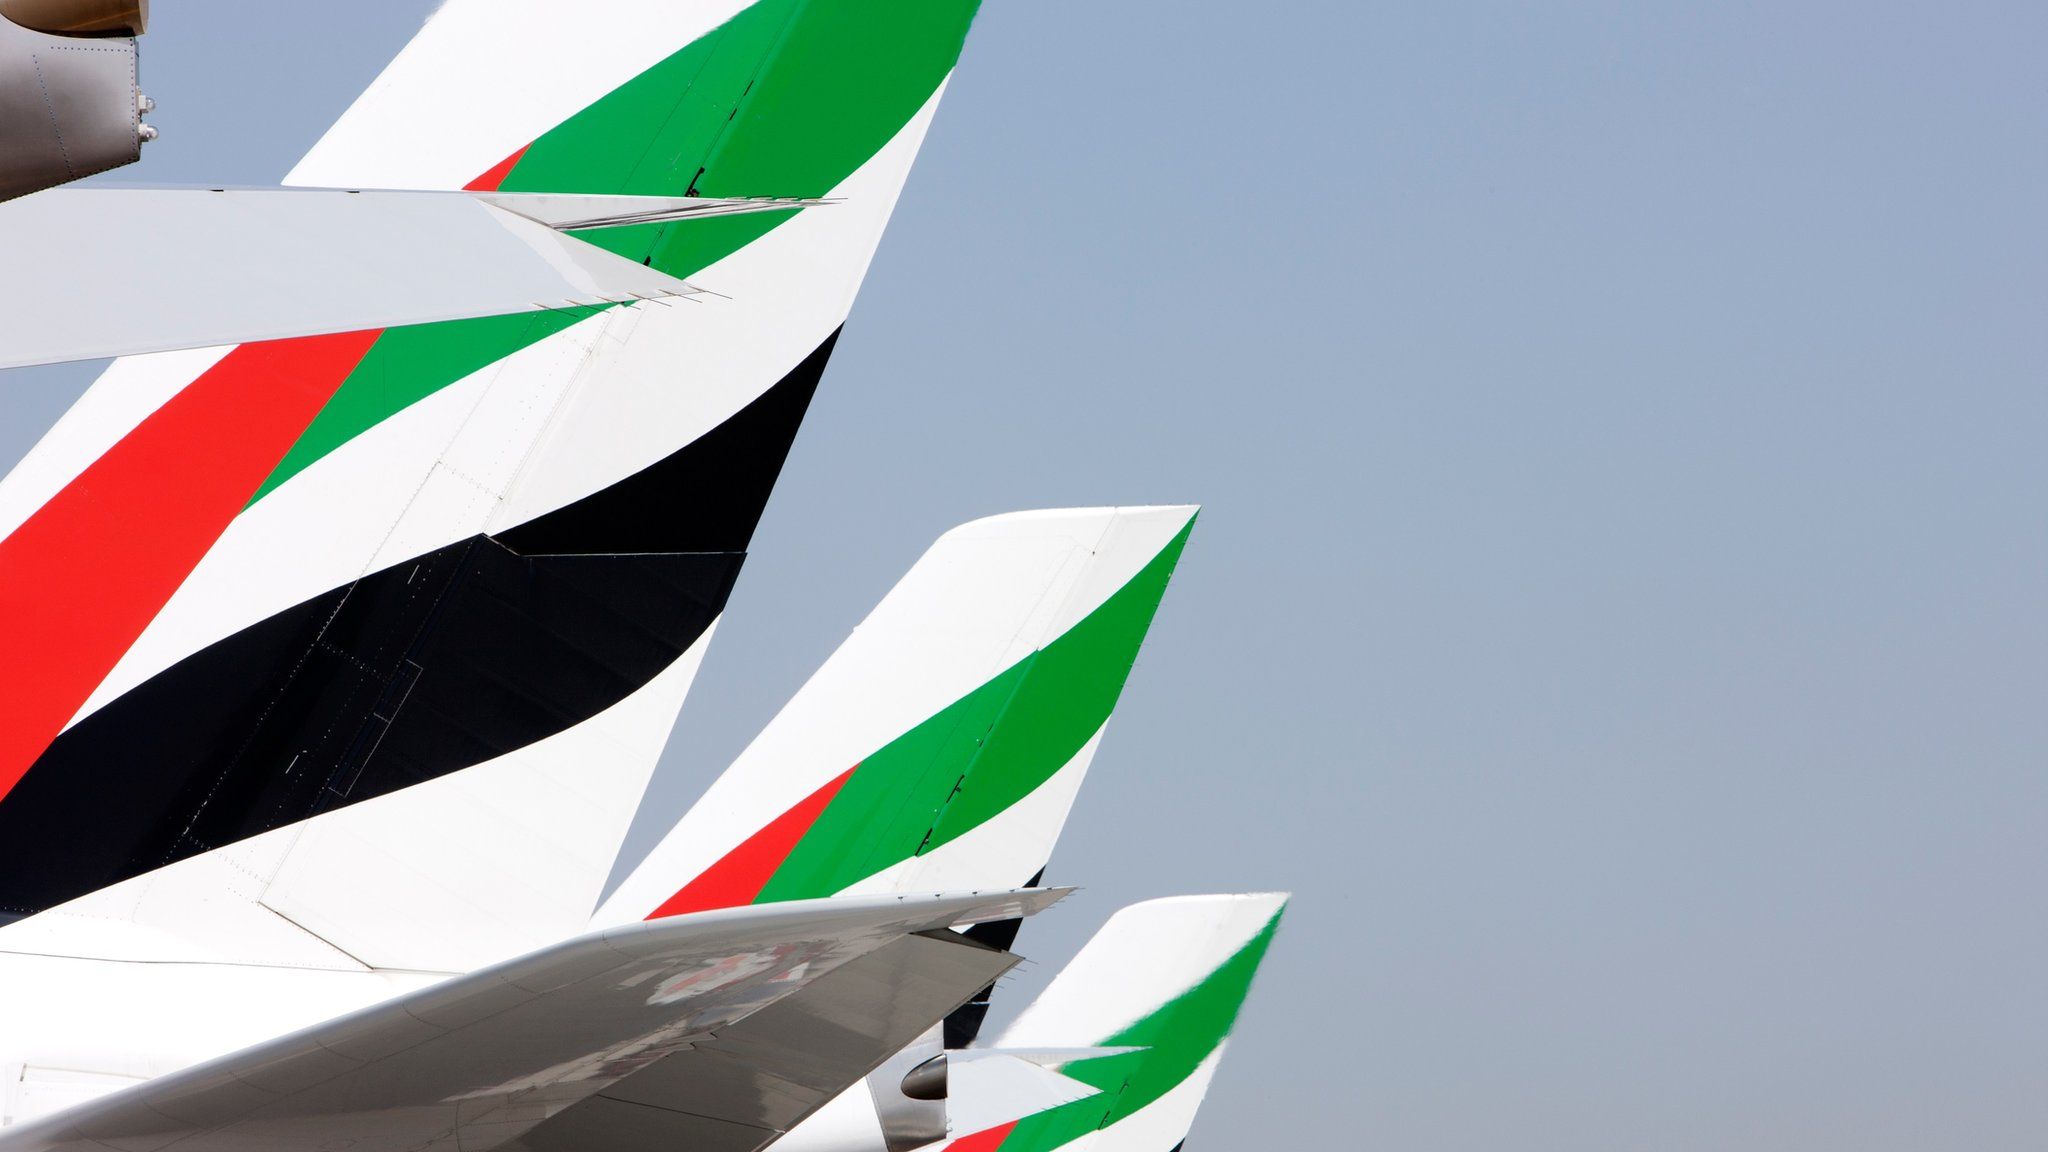 Emirates A380 tailfins